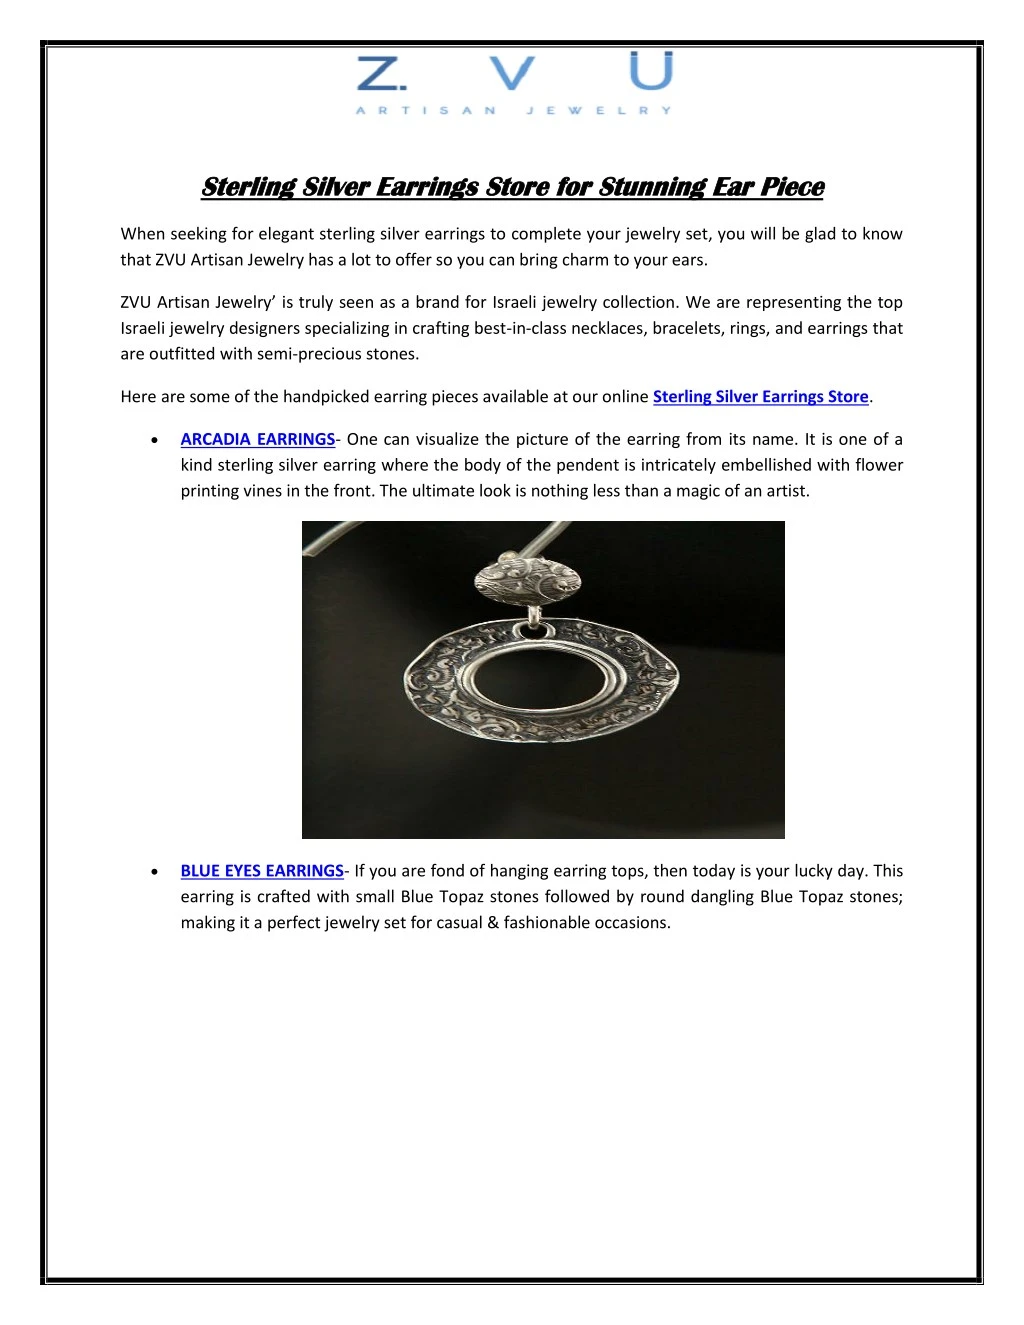 sterling silver earrings store for stunning